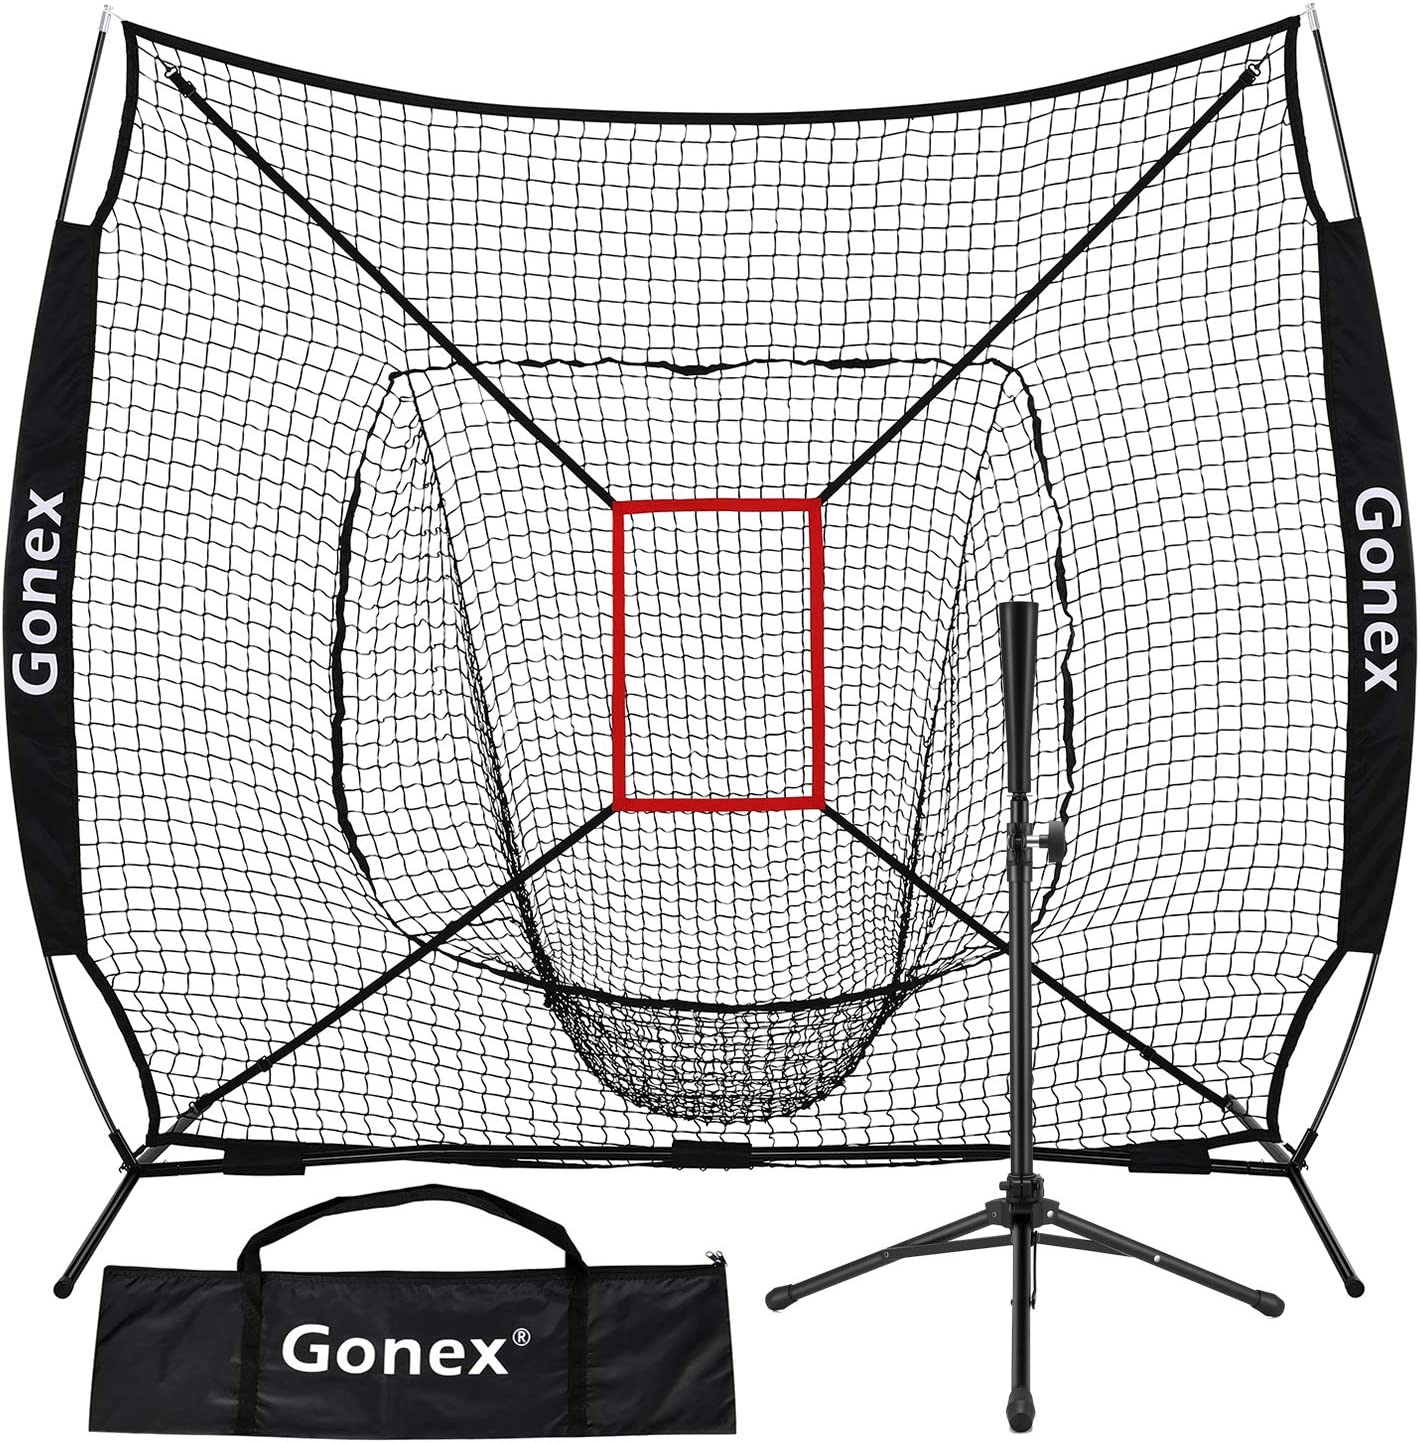 baseball net and tee set